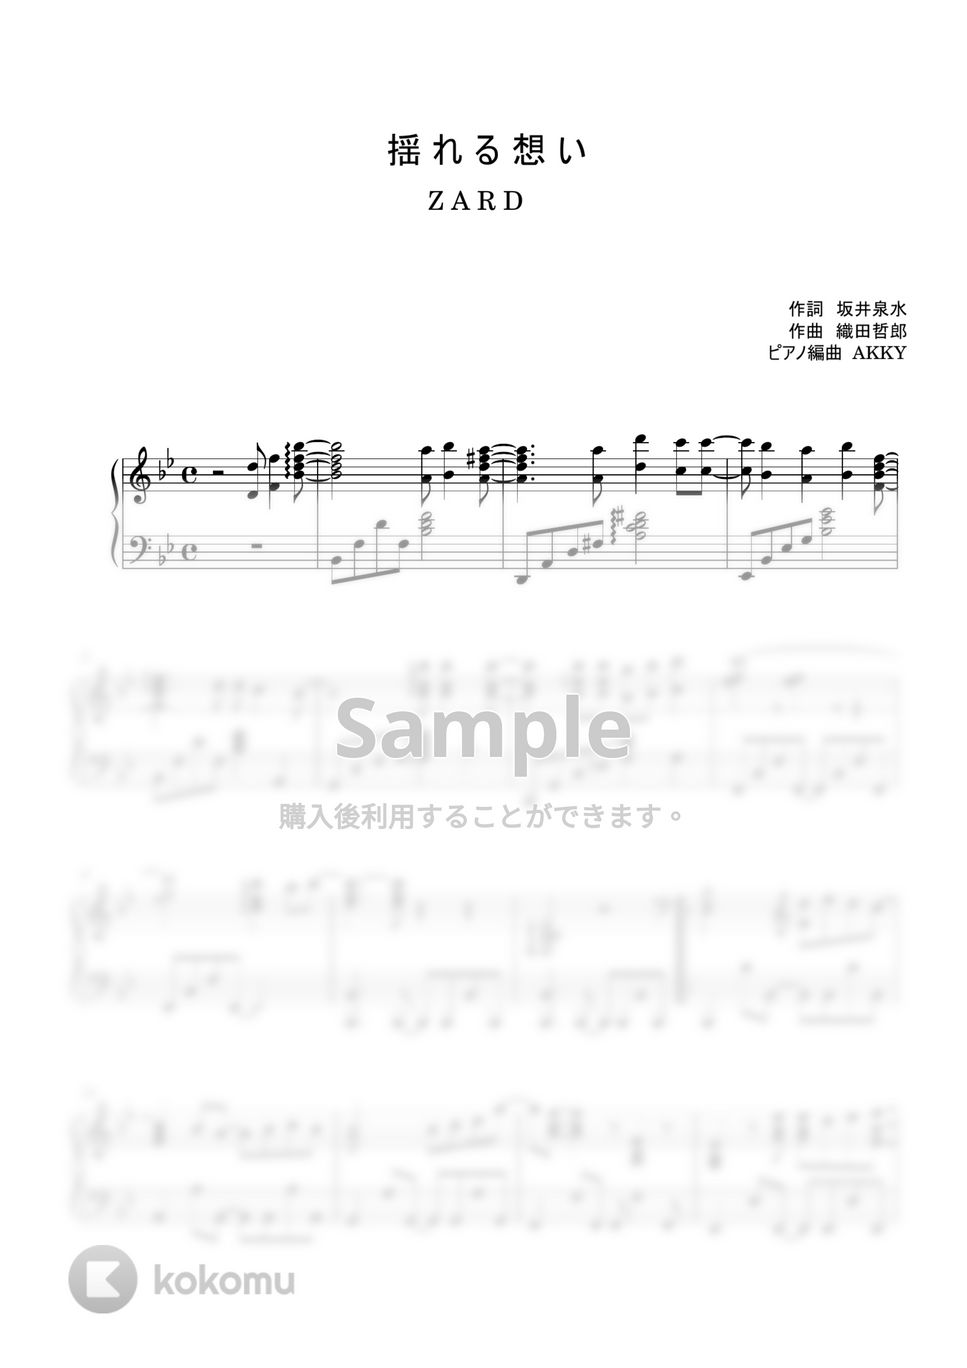 ZARD - 揺れる想い (ピアノ/ZARD) by AKKY